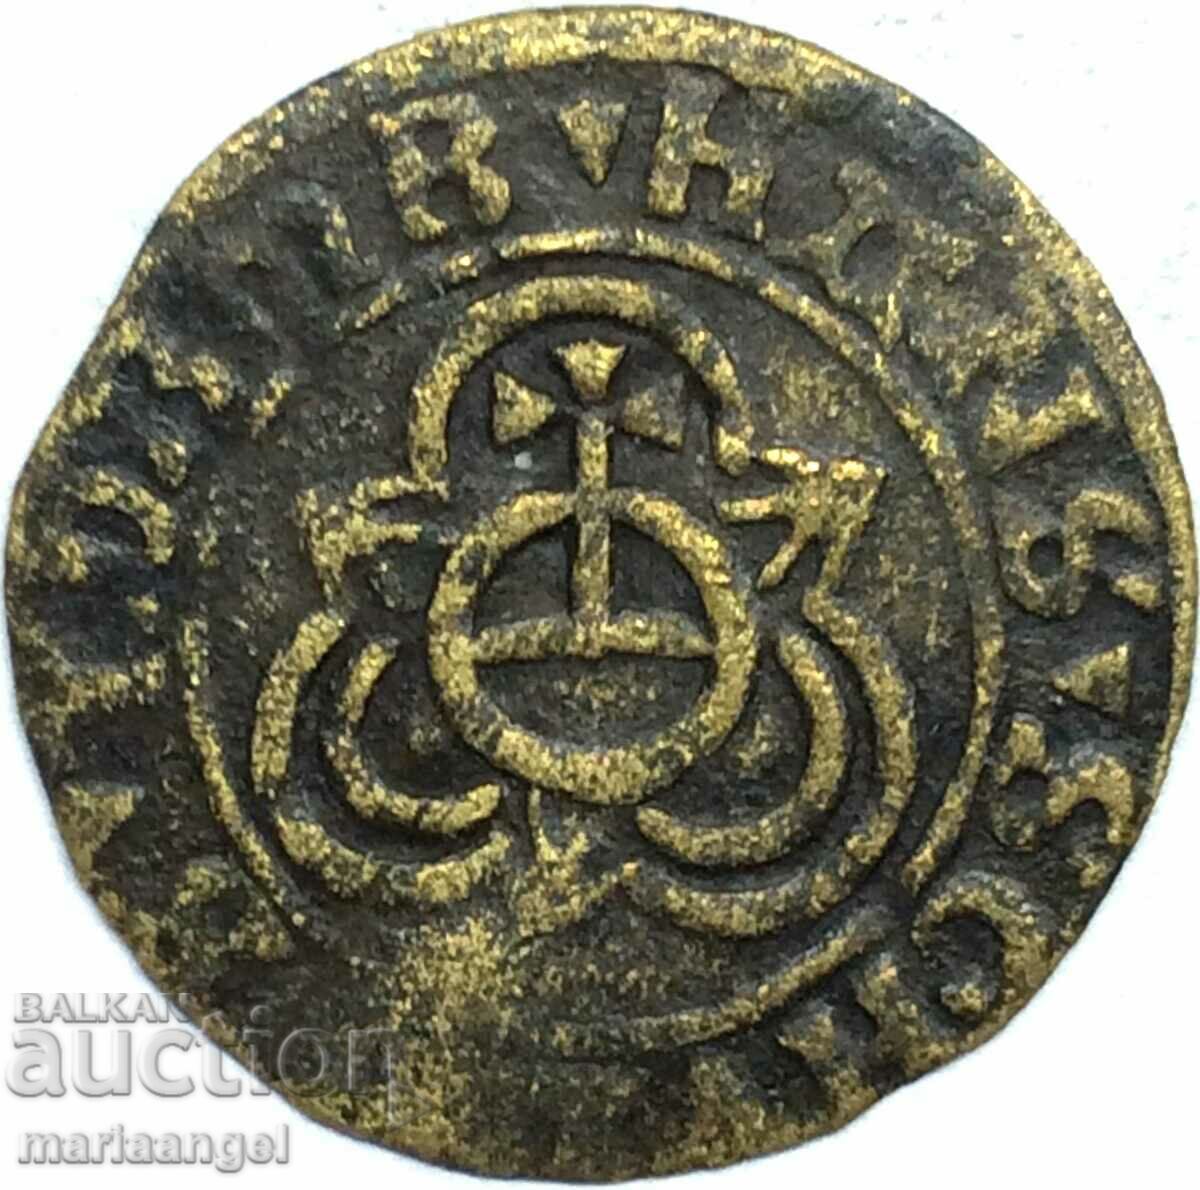 Germany 1 pfennig 28mm brass token